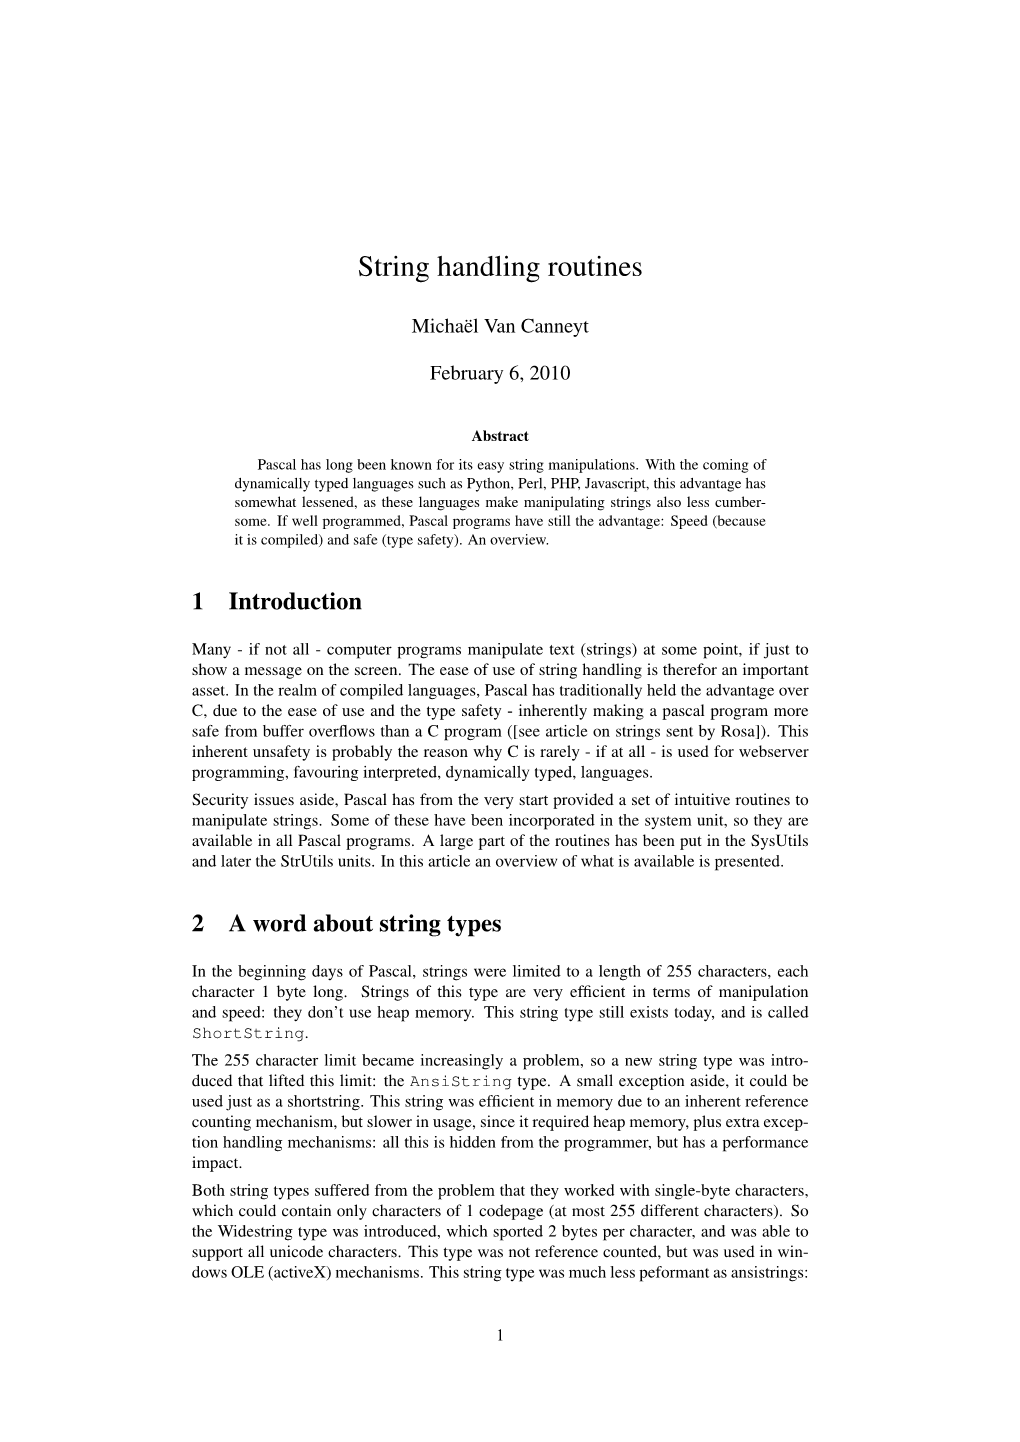 String Handling Routines